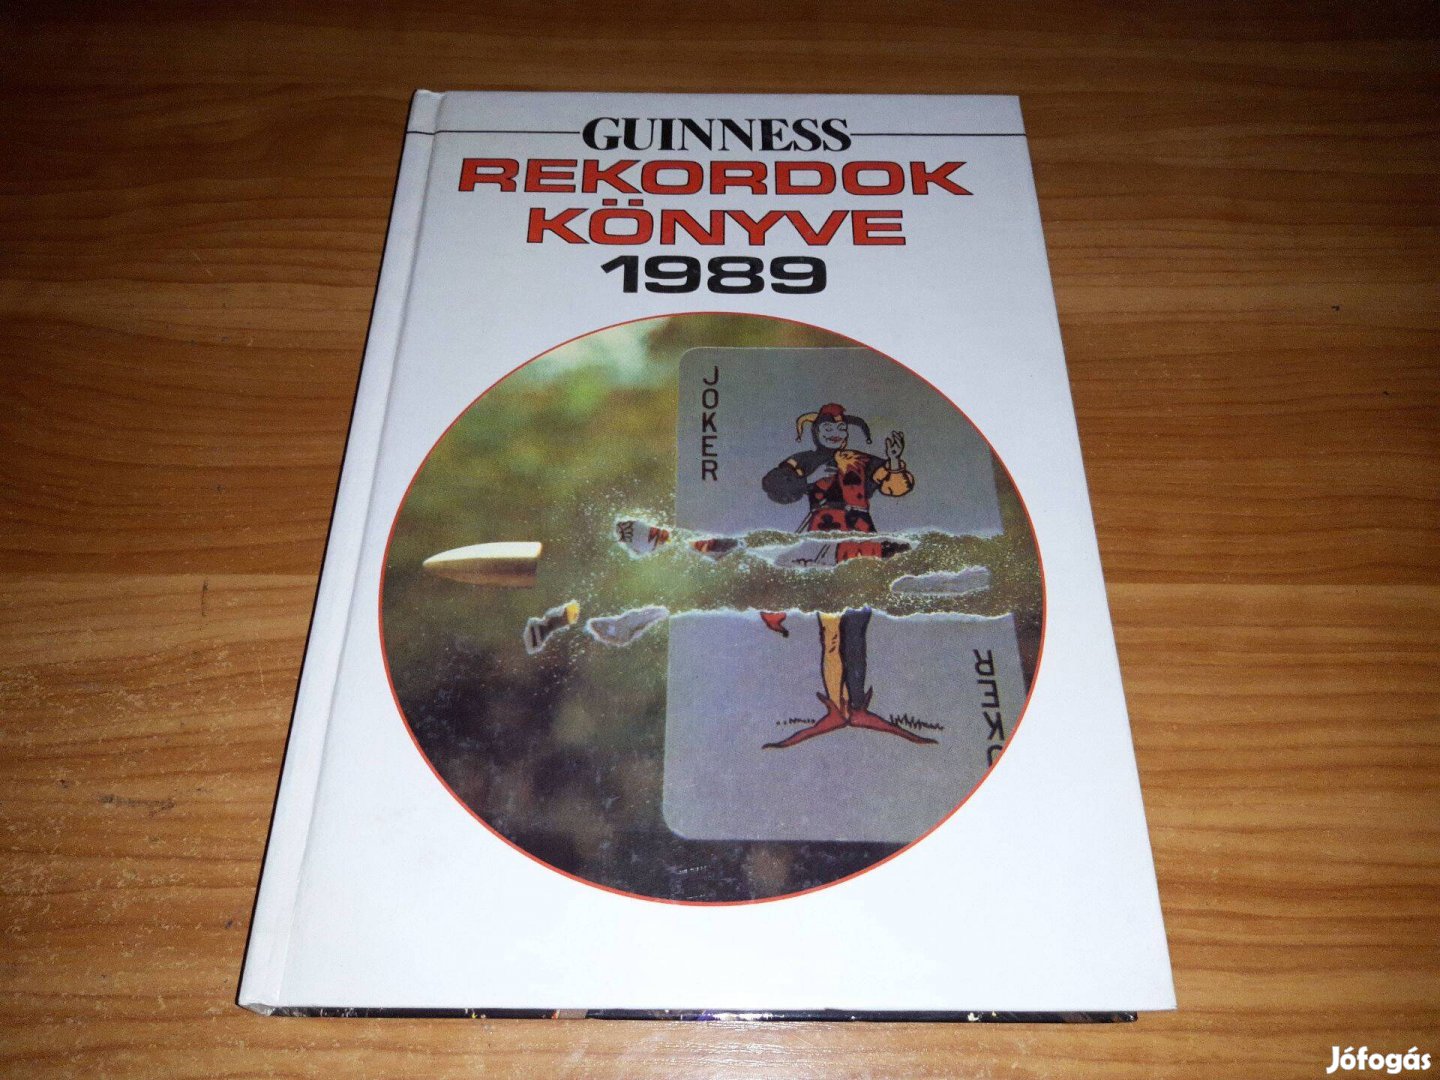 Guinnes rekordok könyve 1989 - Vianco Stúdió